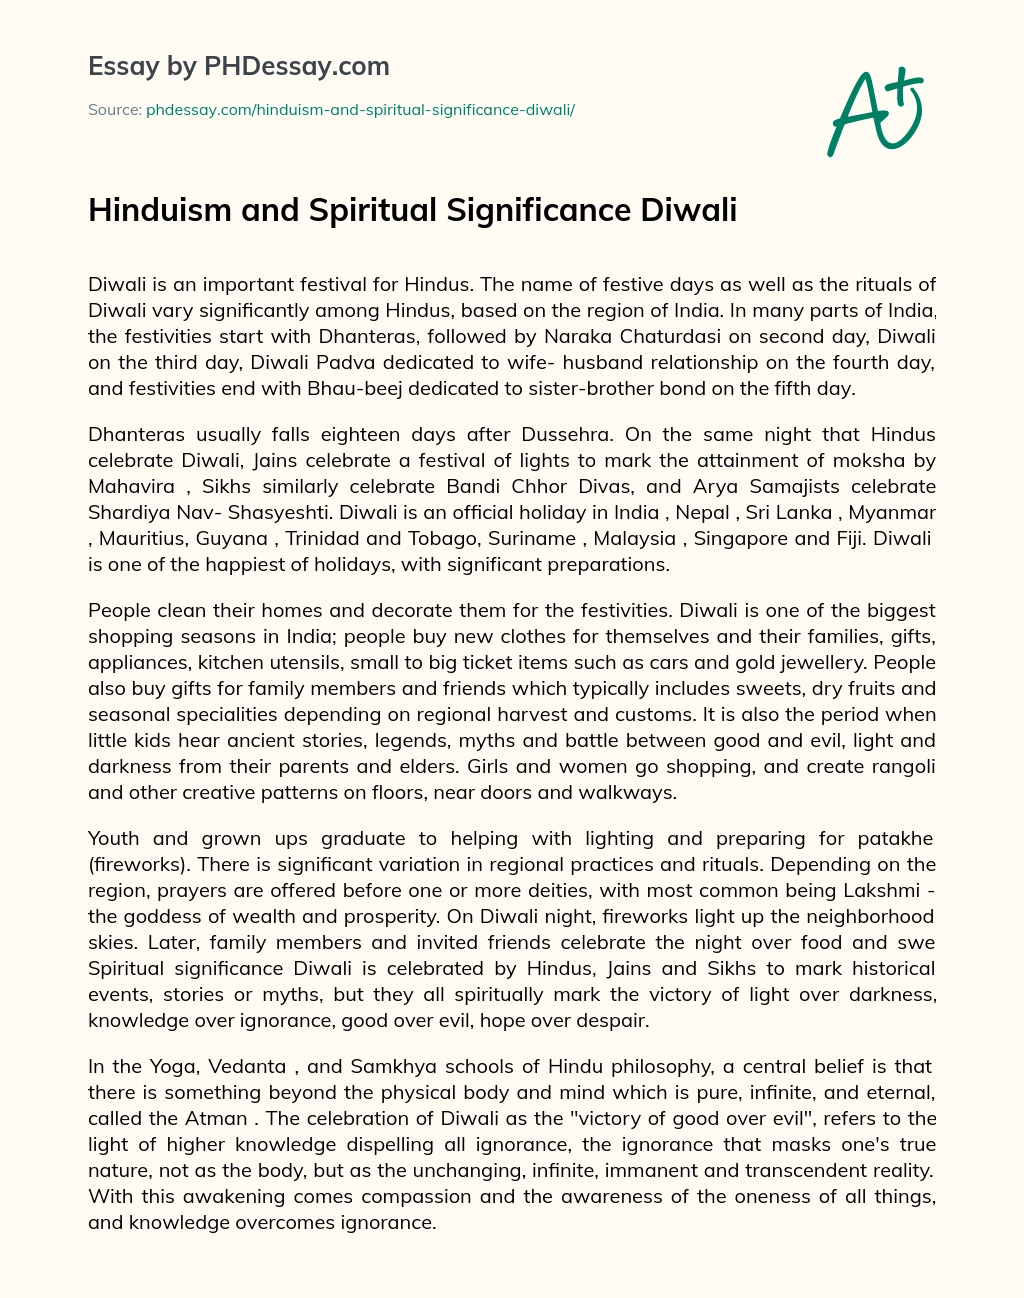 Hinduism and Spiritual Significance Diwali essay